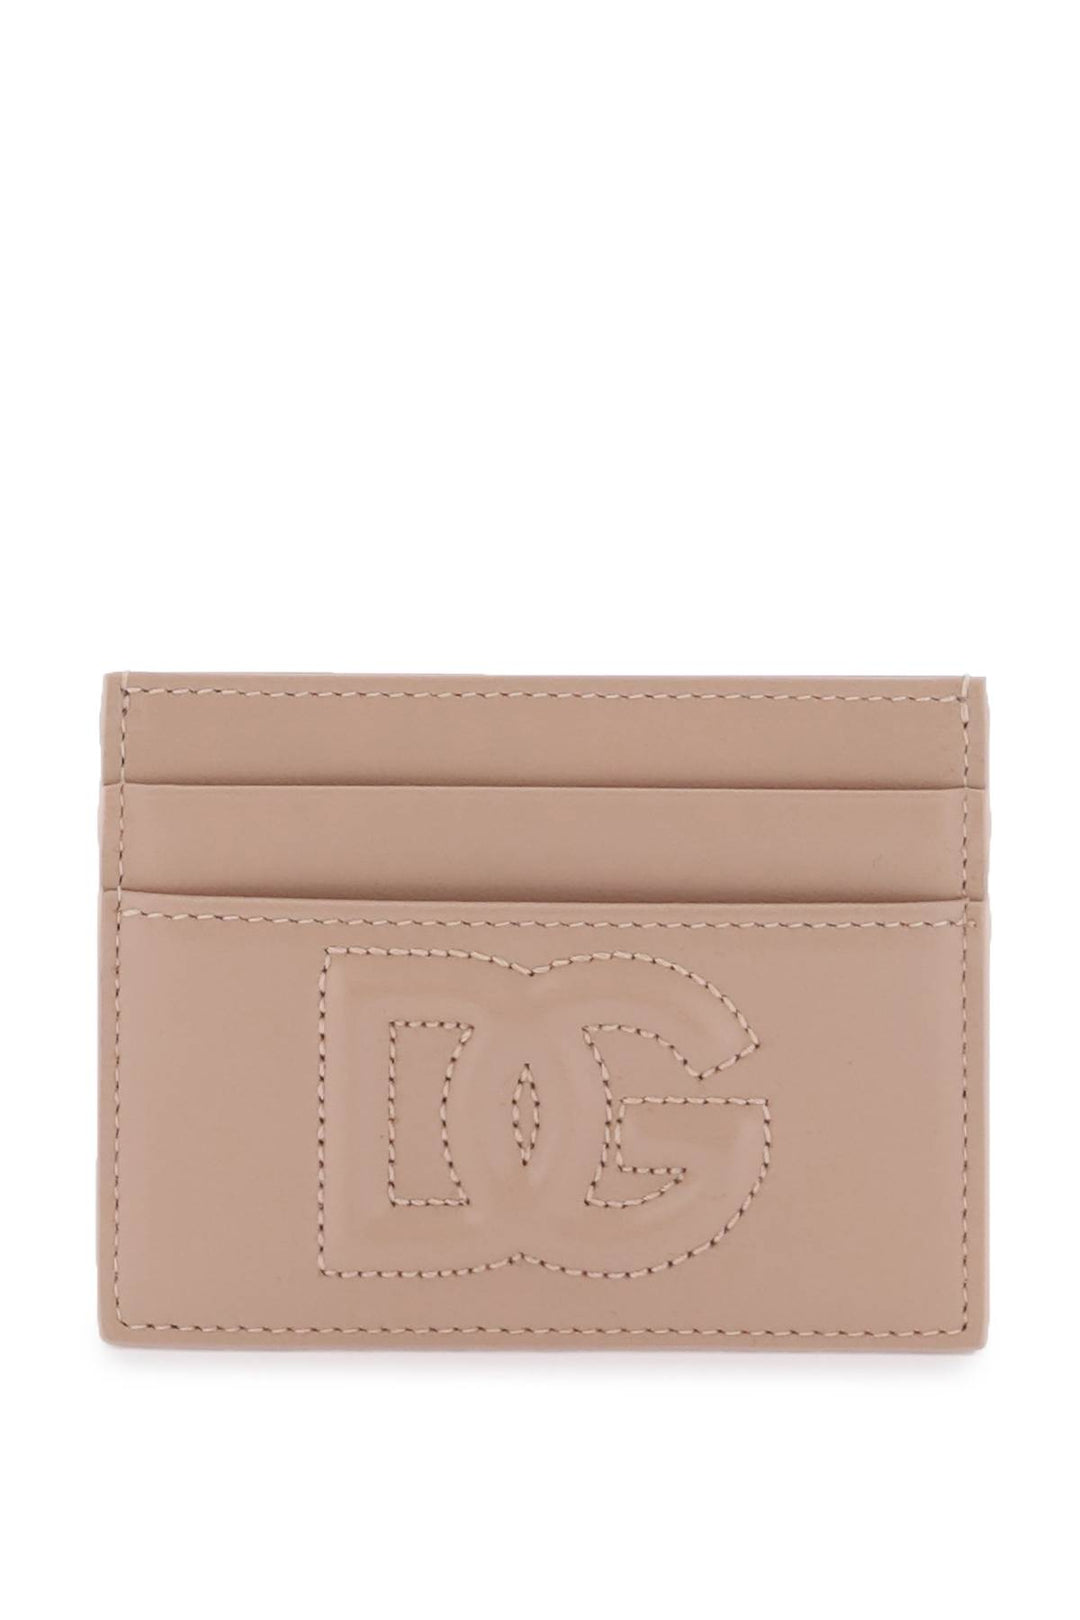 Dolce & Gabbana Dg Logo Cardholder   Neutro